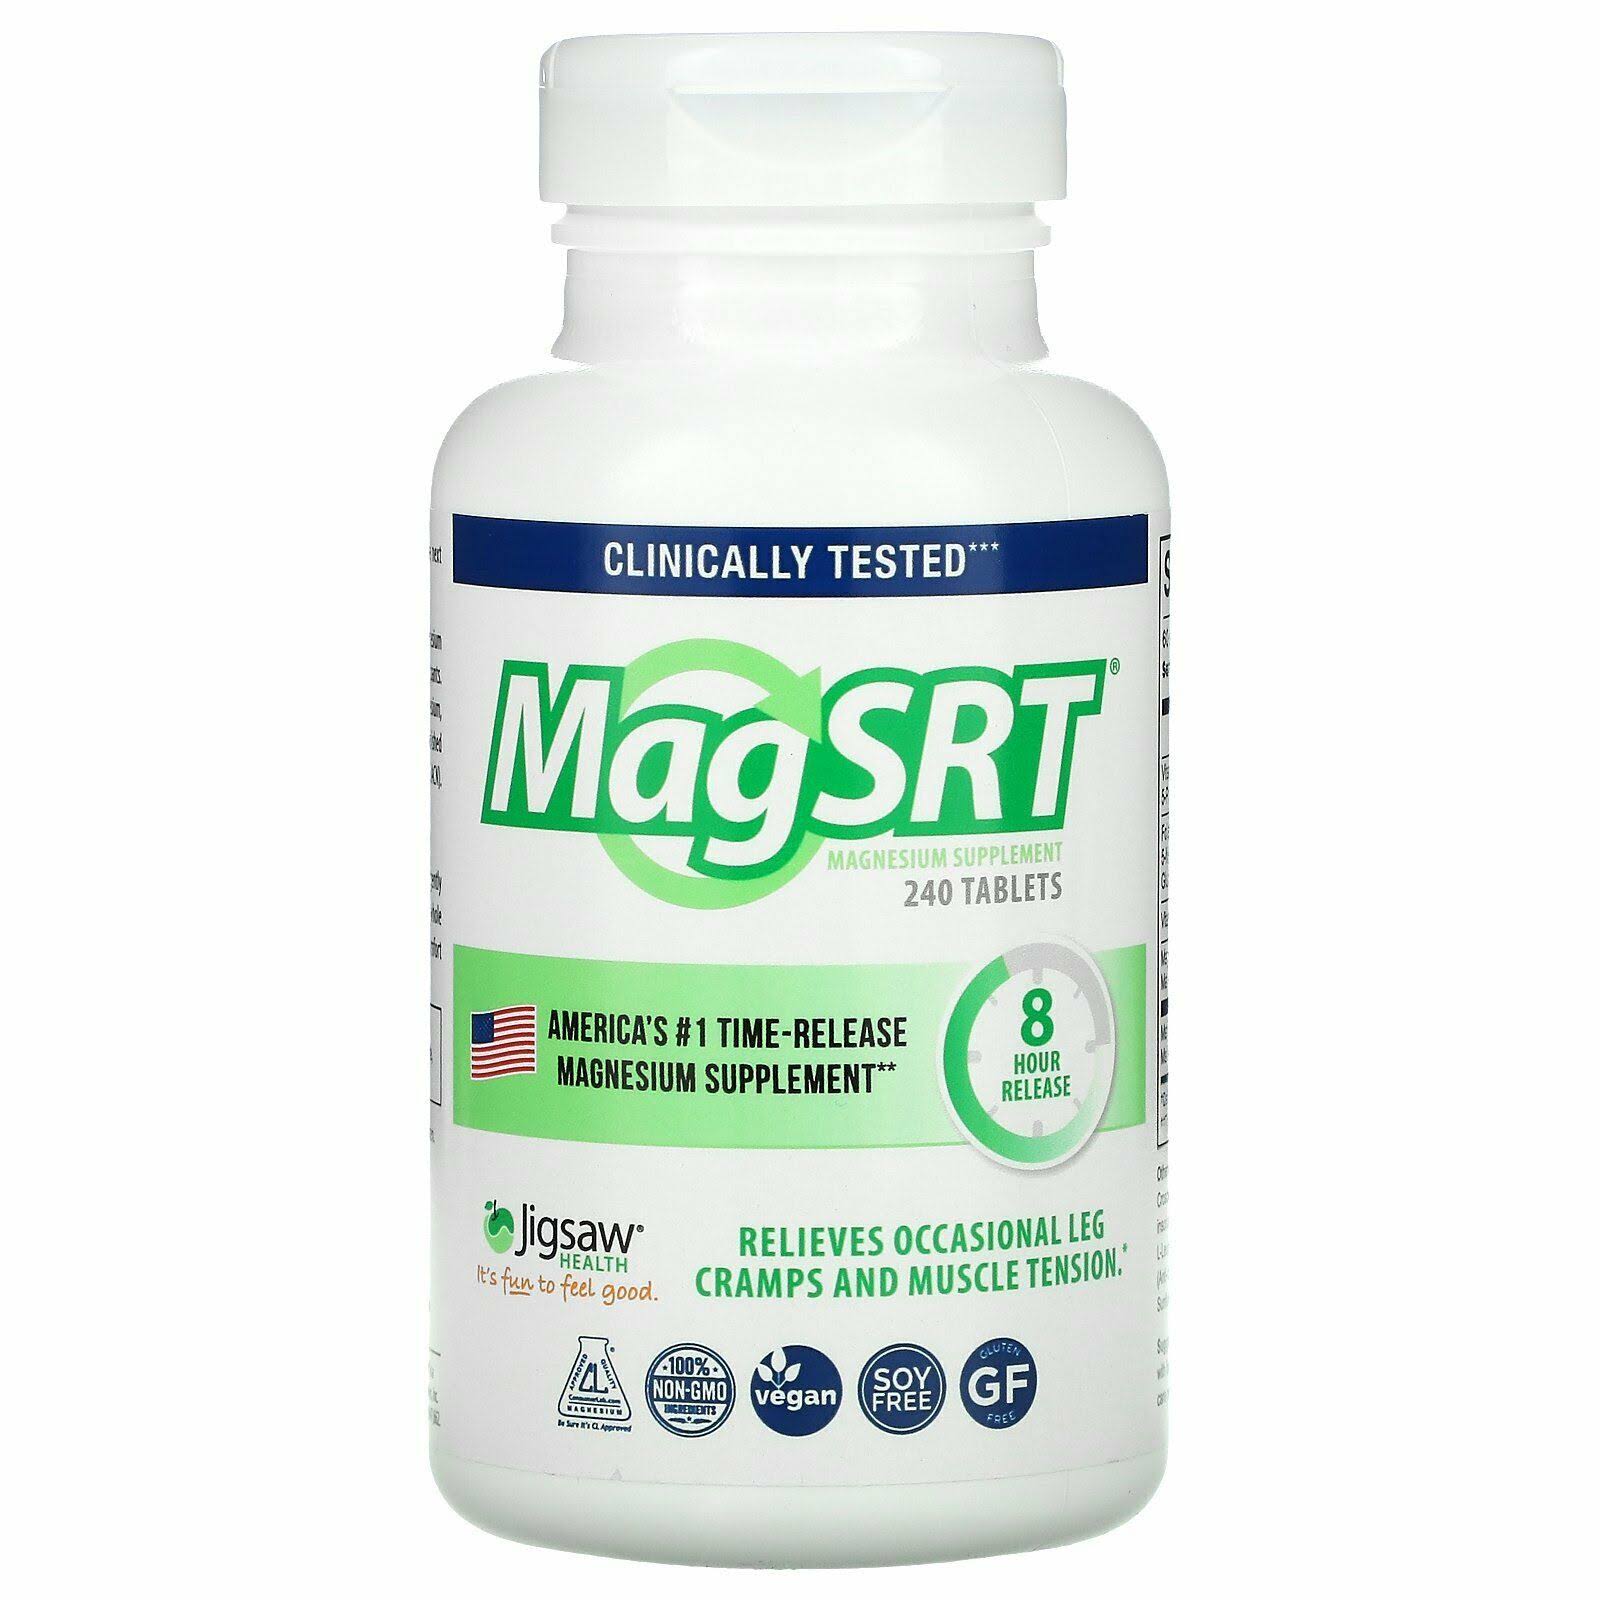 Jigsaw Health Magnesium with SRT Tablets - x240